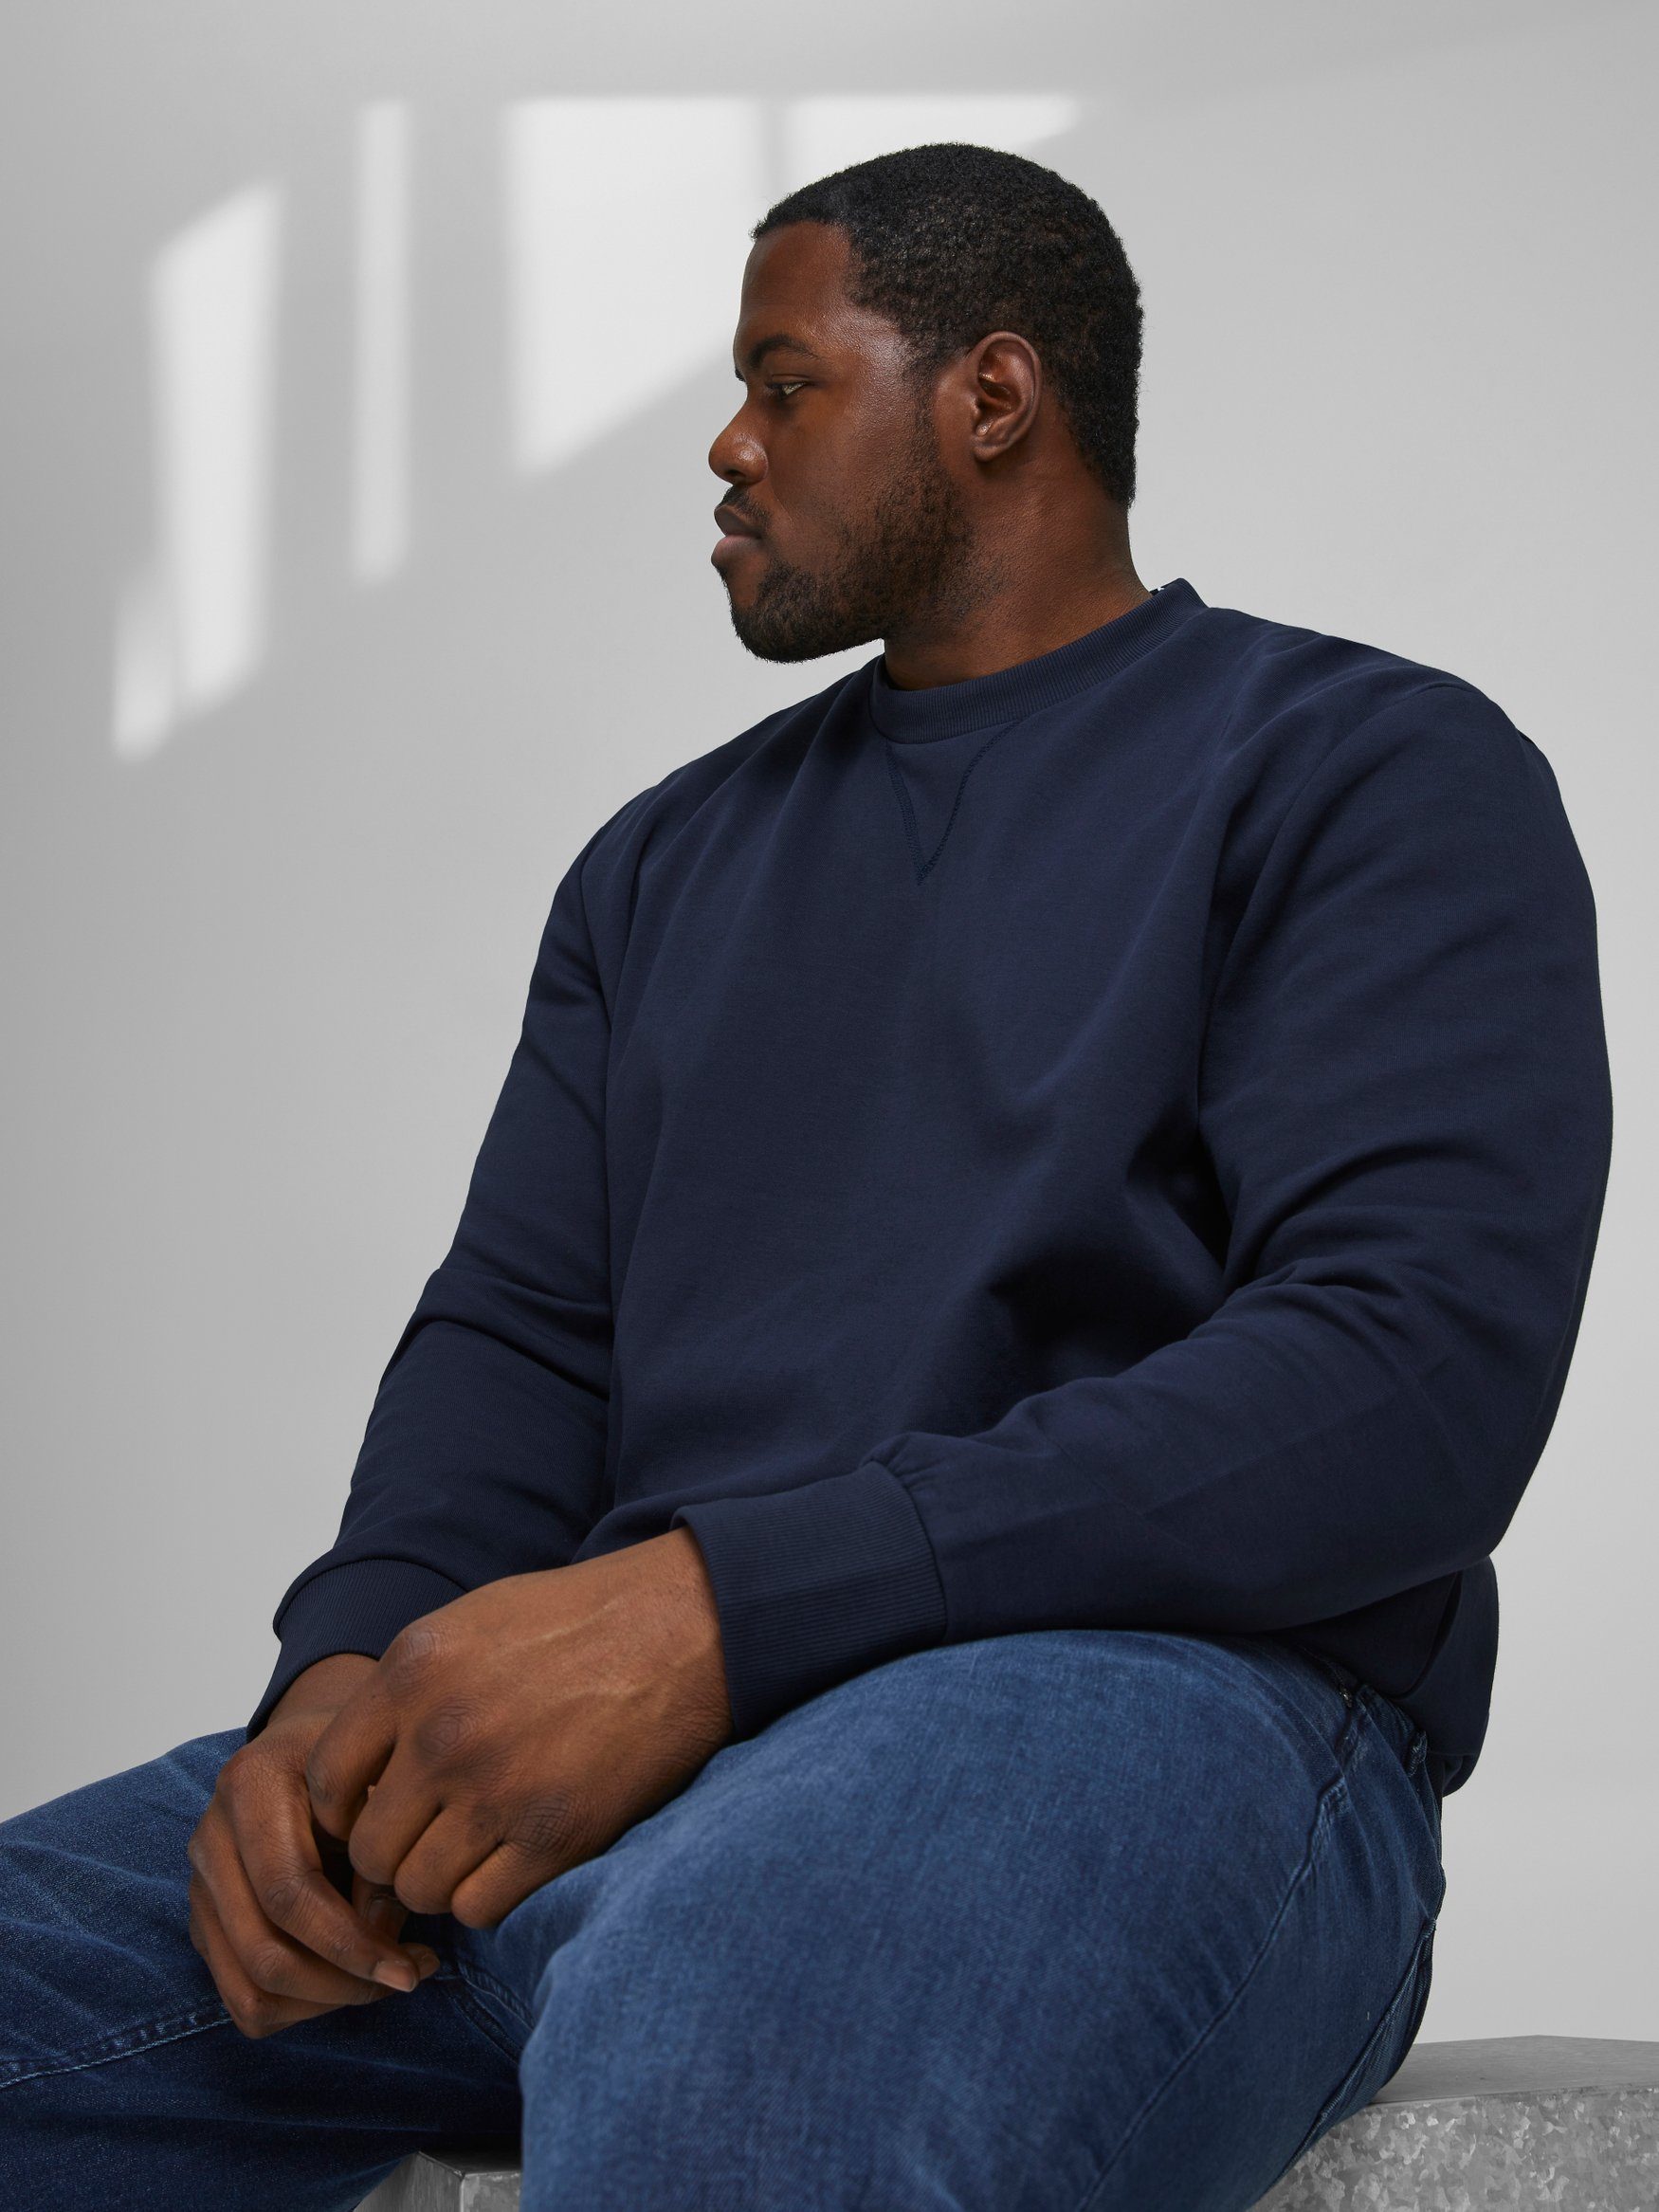 & Sweatshirt Übergröße Sweater 4832 Navy Sweatshirt JJEBASIC Jones Basic Plus in Pullover Jack Size